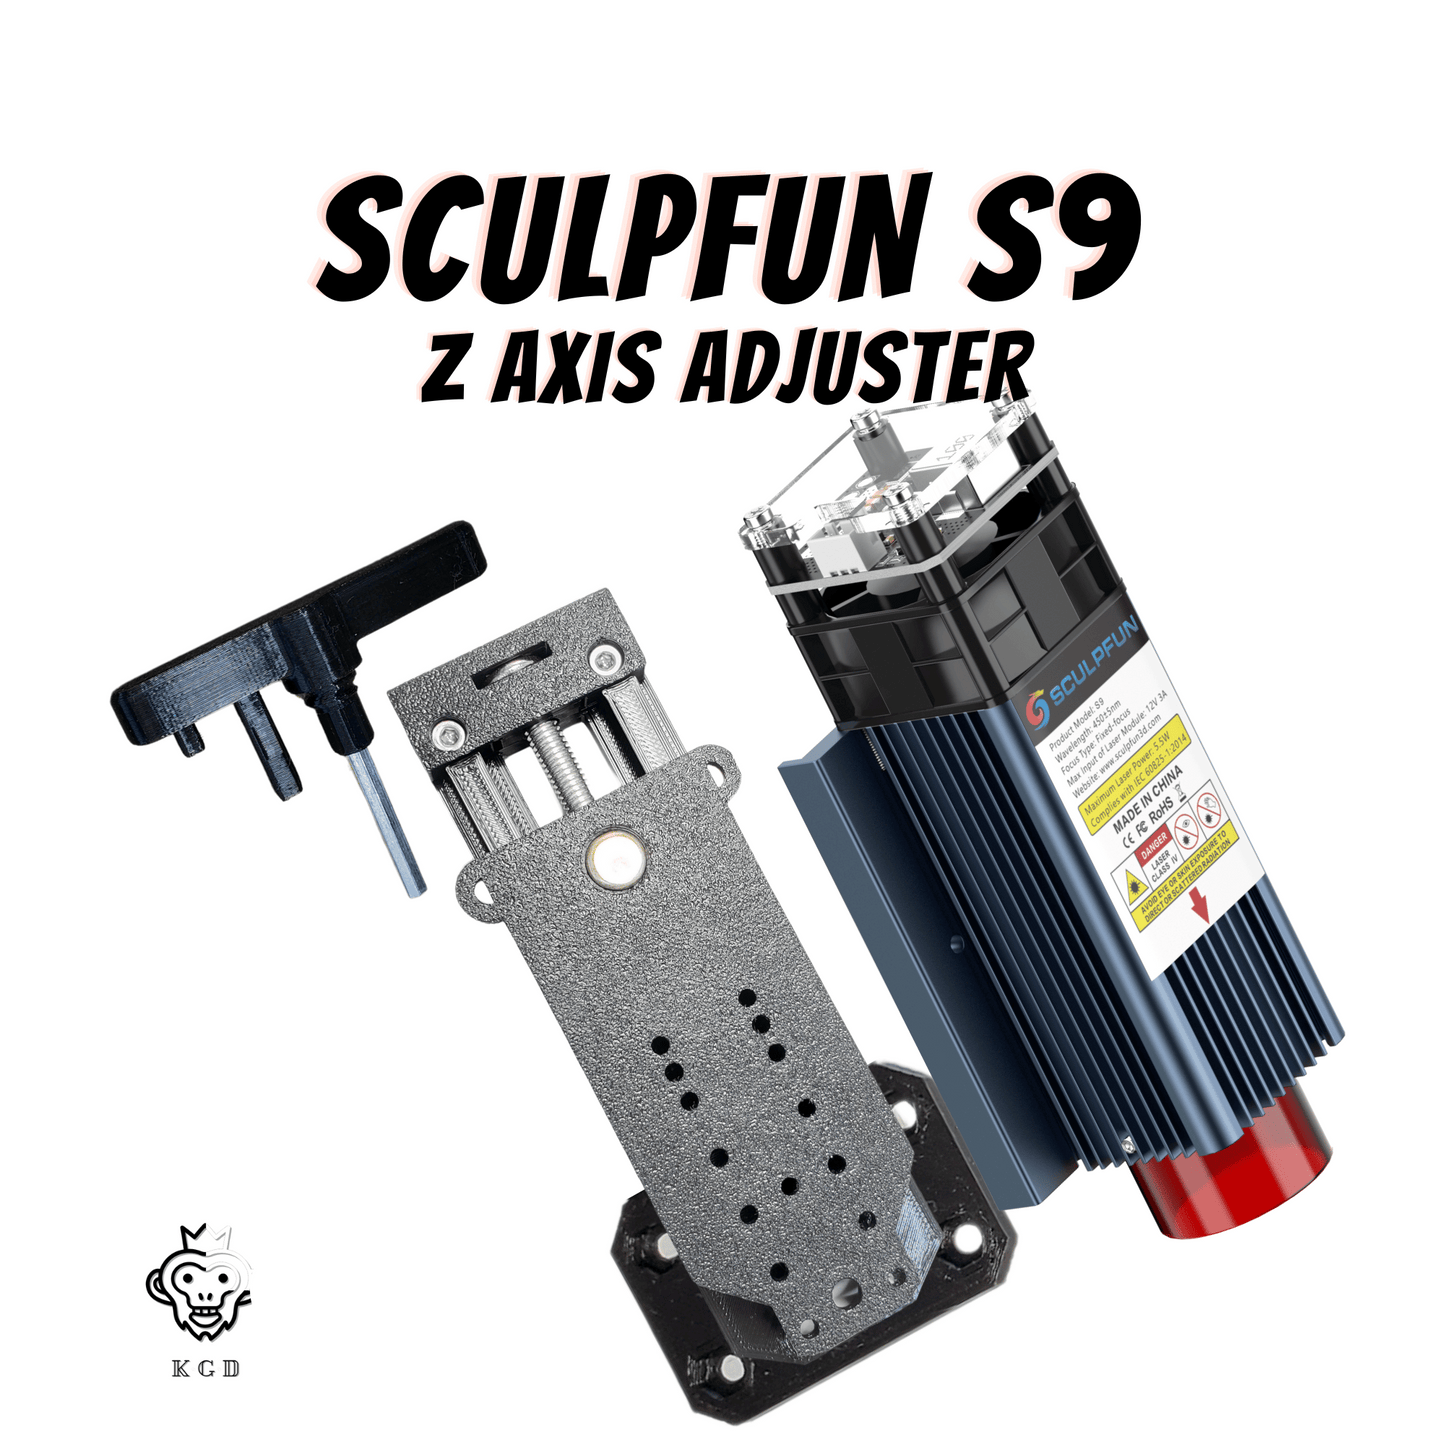 Sculpfun S9 Z Axis Adjuster